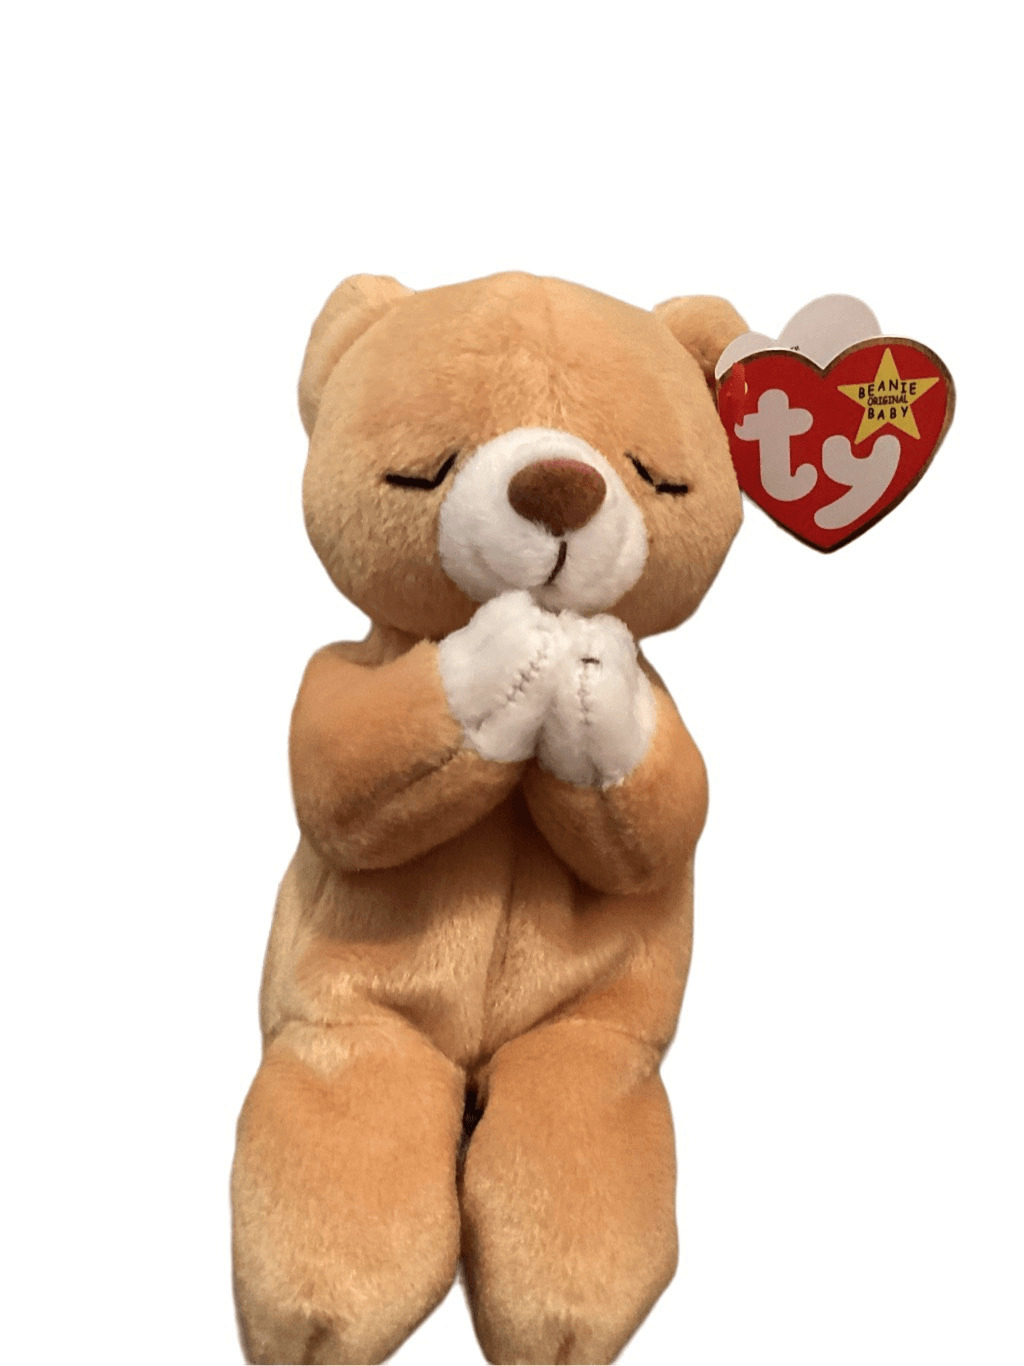 1999 Hope Prayer Bear Ty Beanie Baby Plush Collectible Tag Error Misspellings Pr